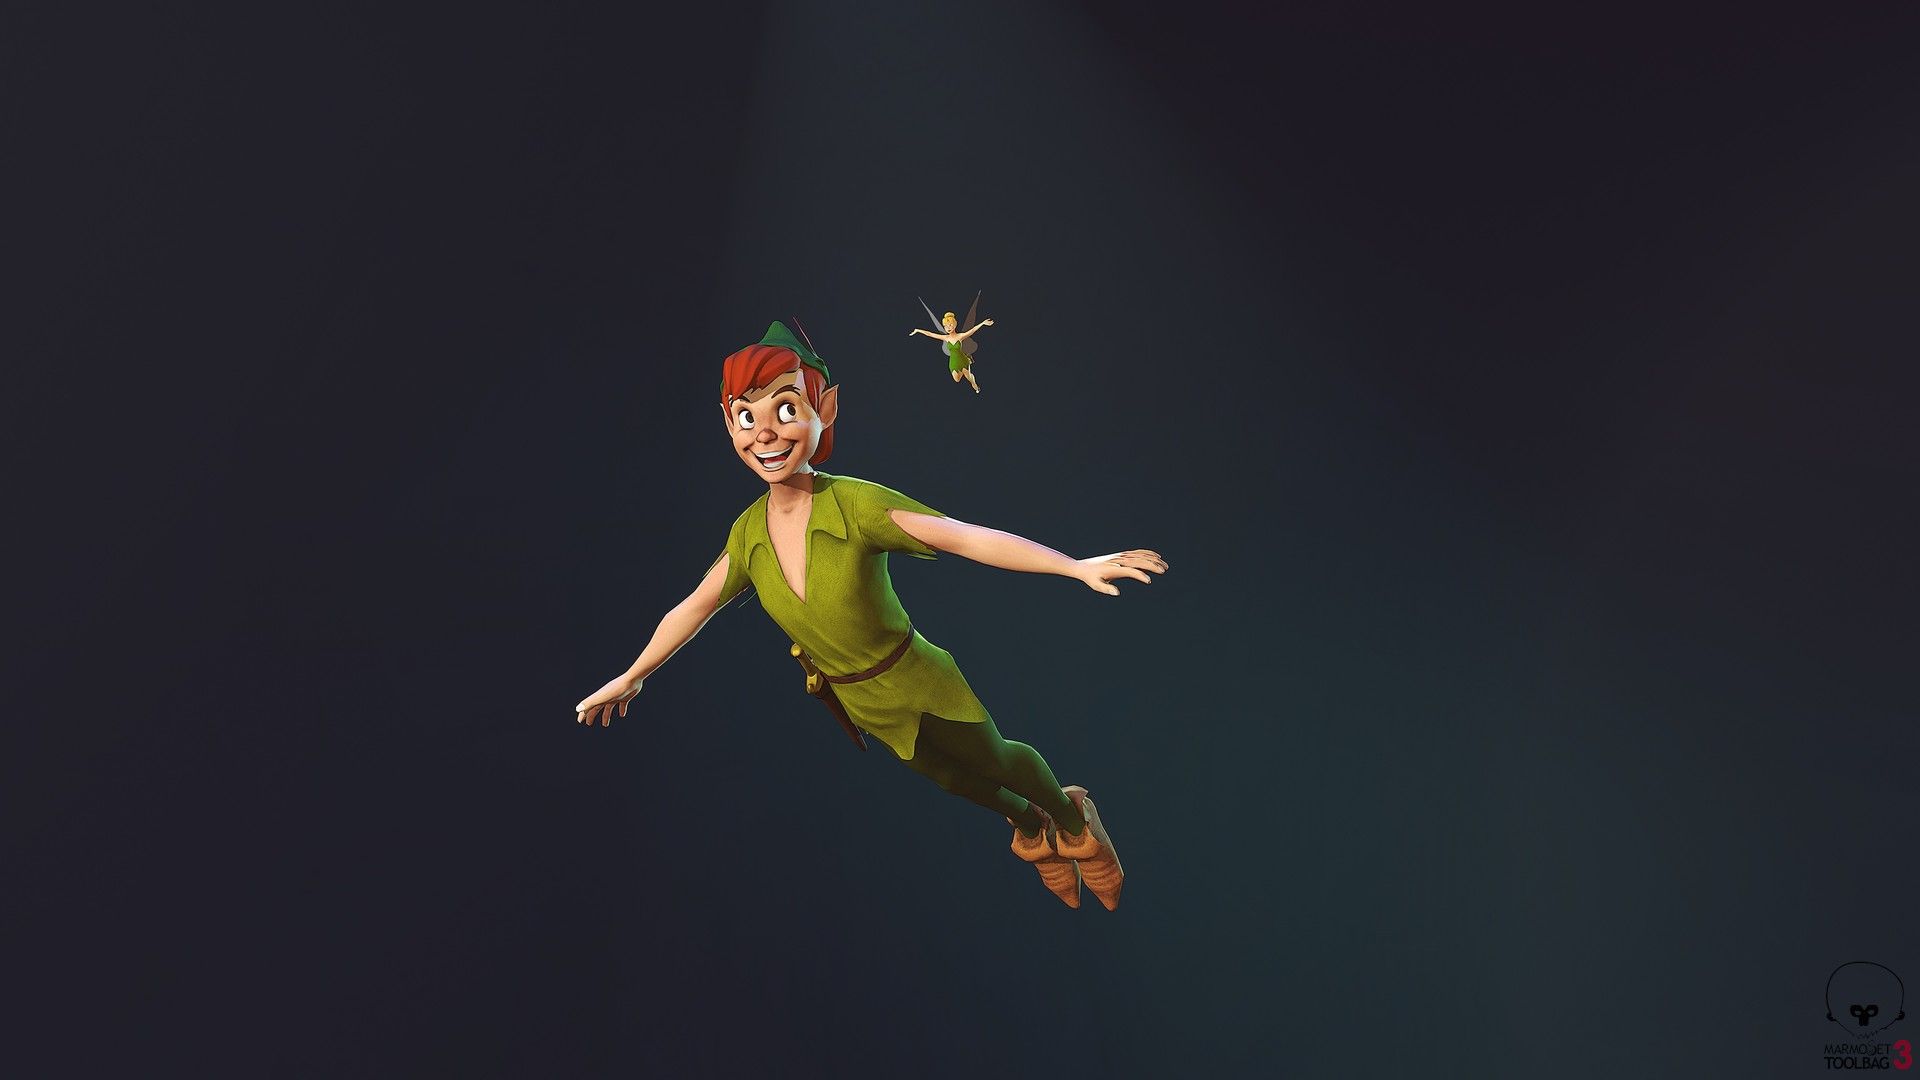 Peter Pan Flying Wallpaper